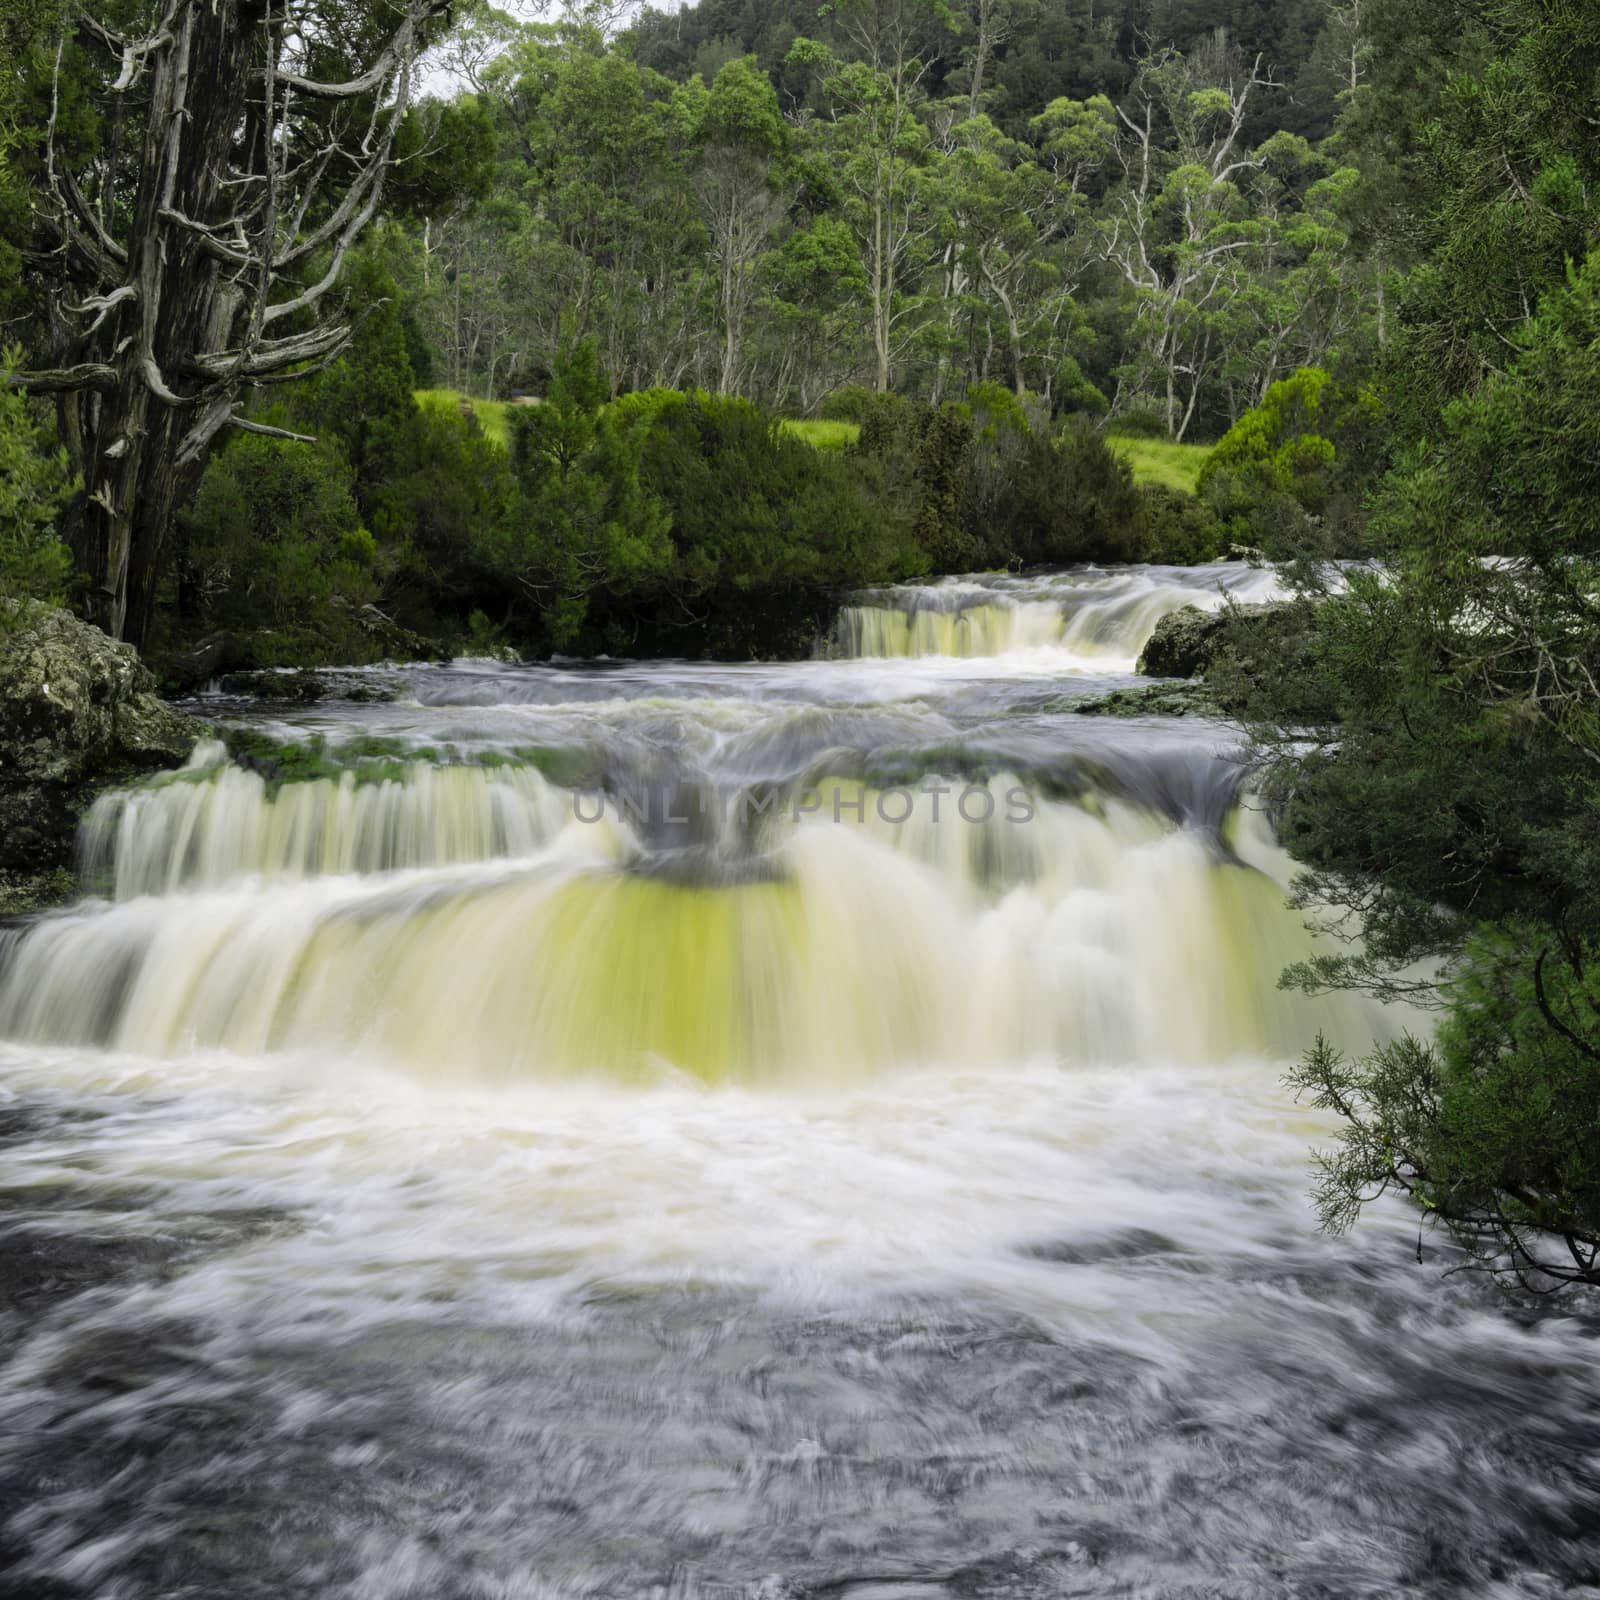 Waterfall in Cradle Mountain, Tasmania, Australia.